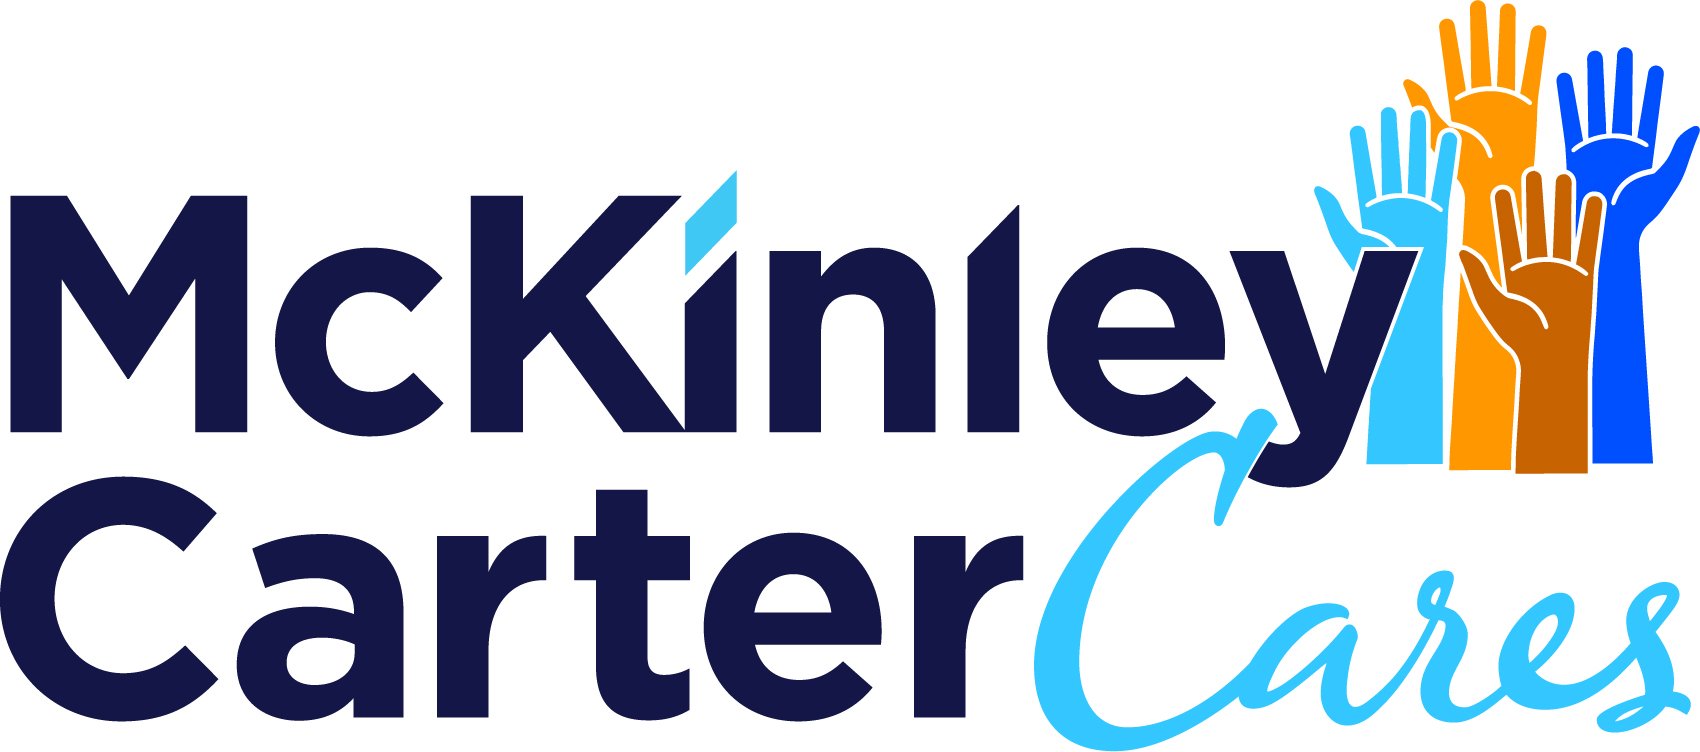 McKinley Carter Cares Logo - Full Color.jpg